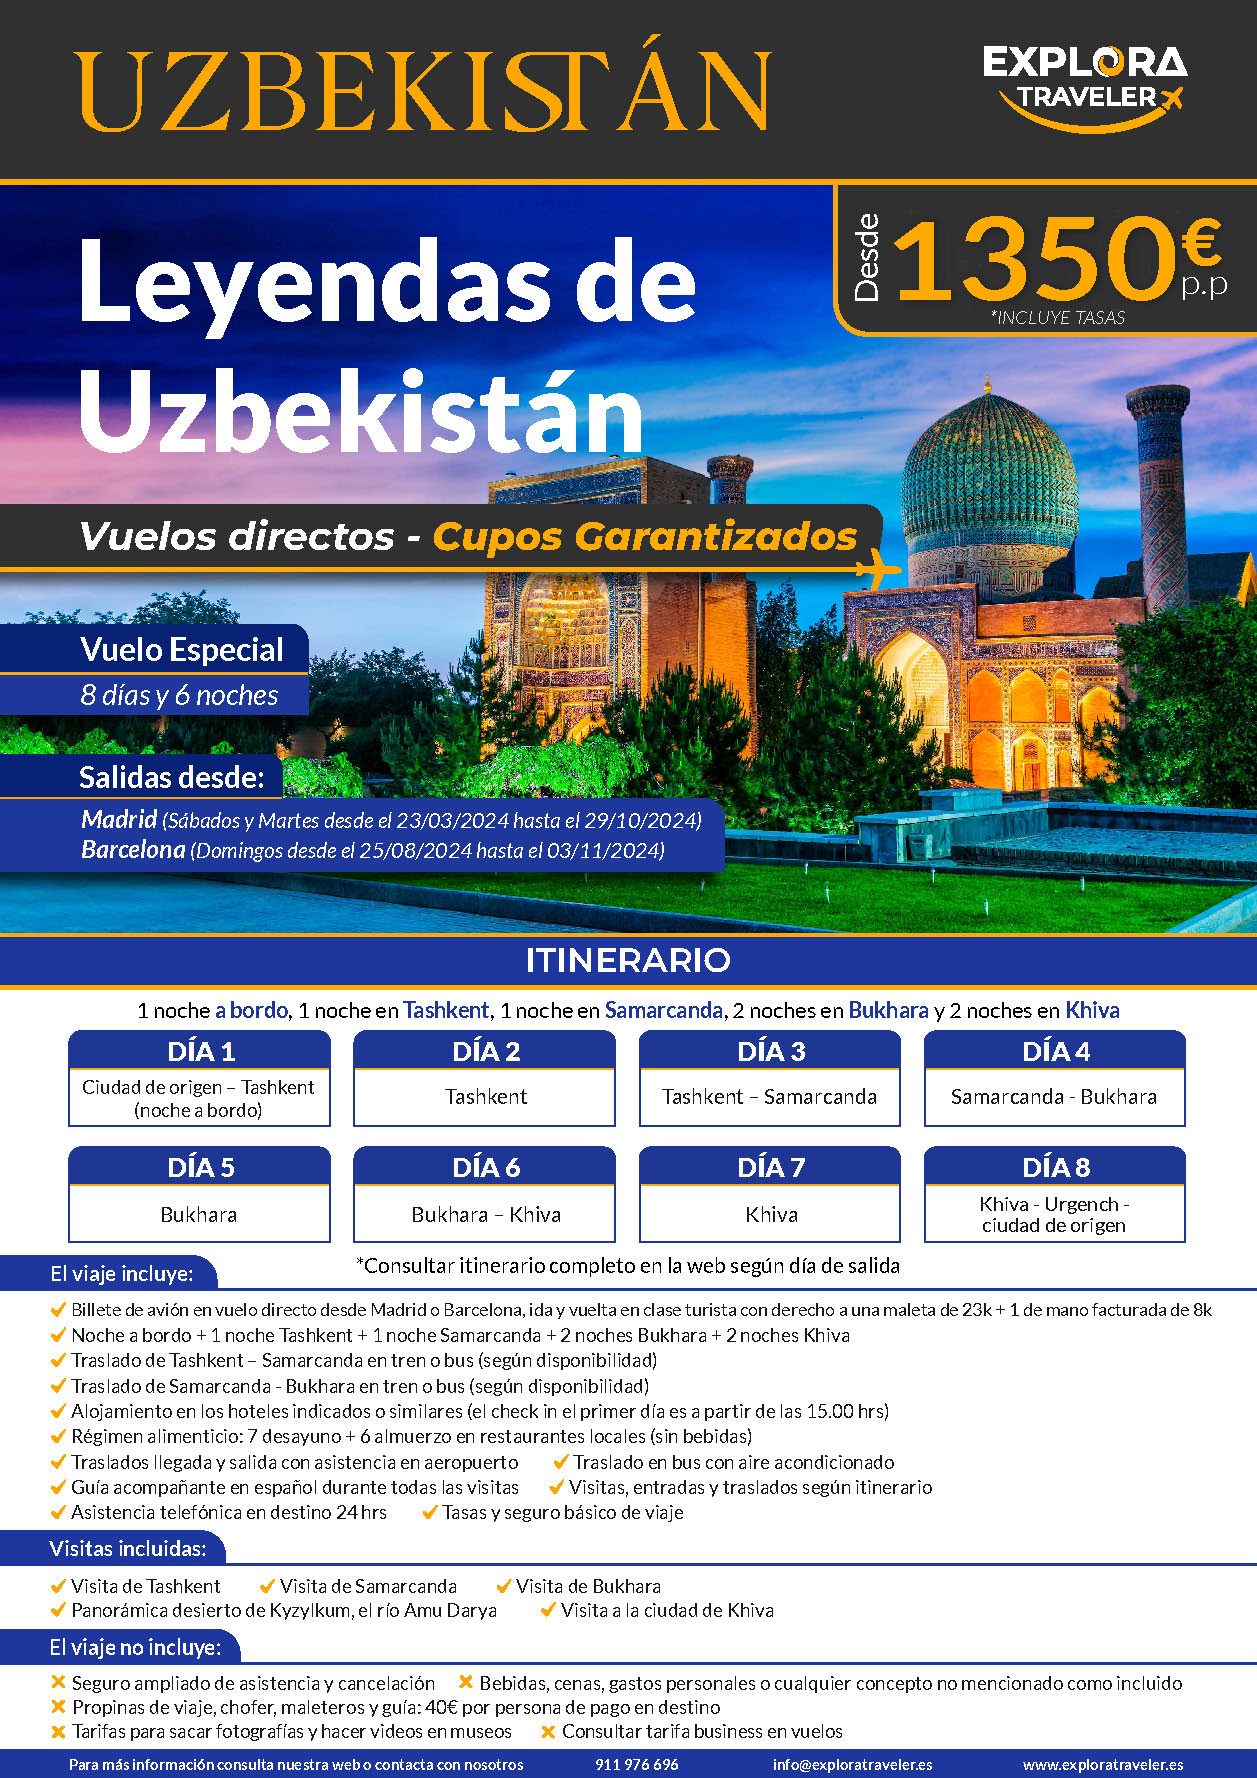 Oferta Explora Traveler circuito Leyendas de Uzbekistan 8 dias Cupos salidas Marzo a Octubre 2024 vuelo directo desde Madrid y Barcelona